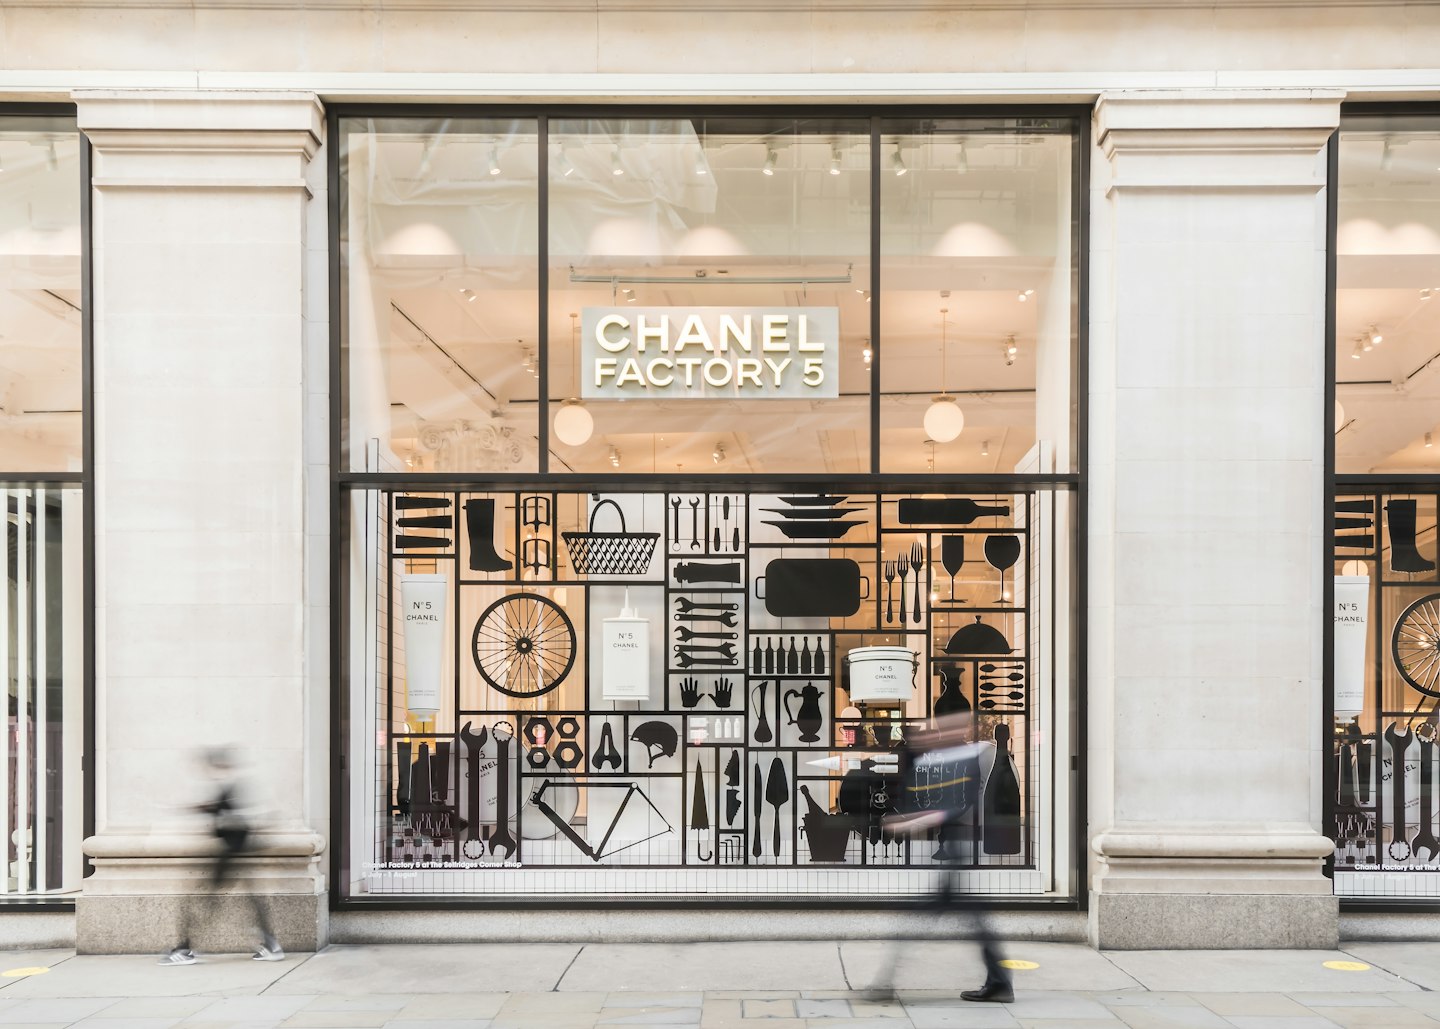 Visit The Chanel Factory 5 Selfridges Pop-Up